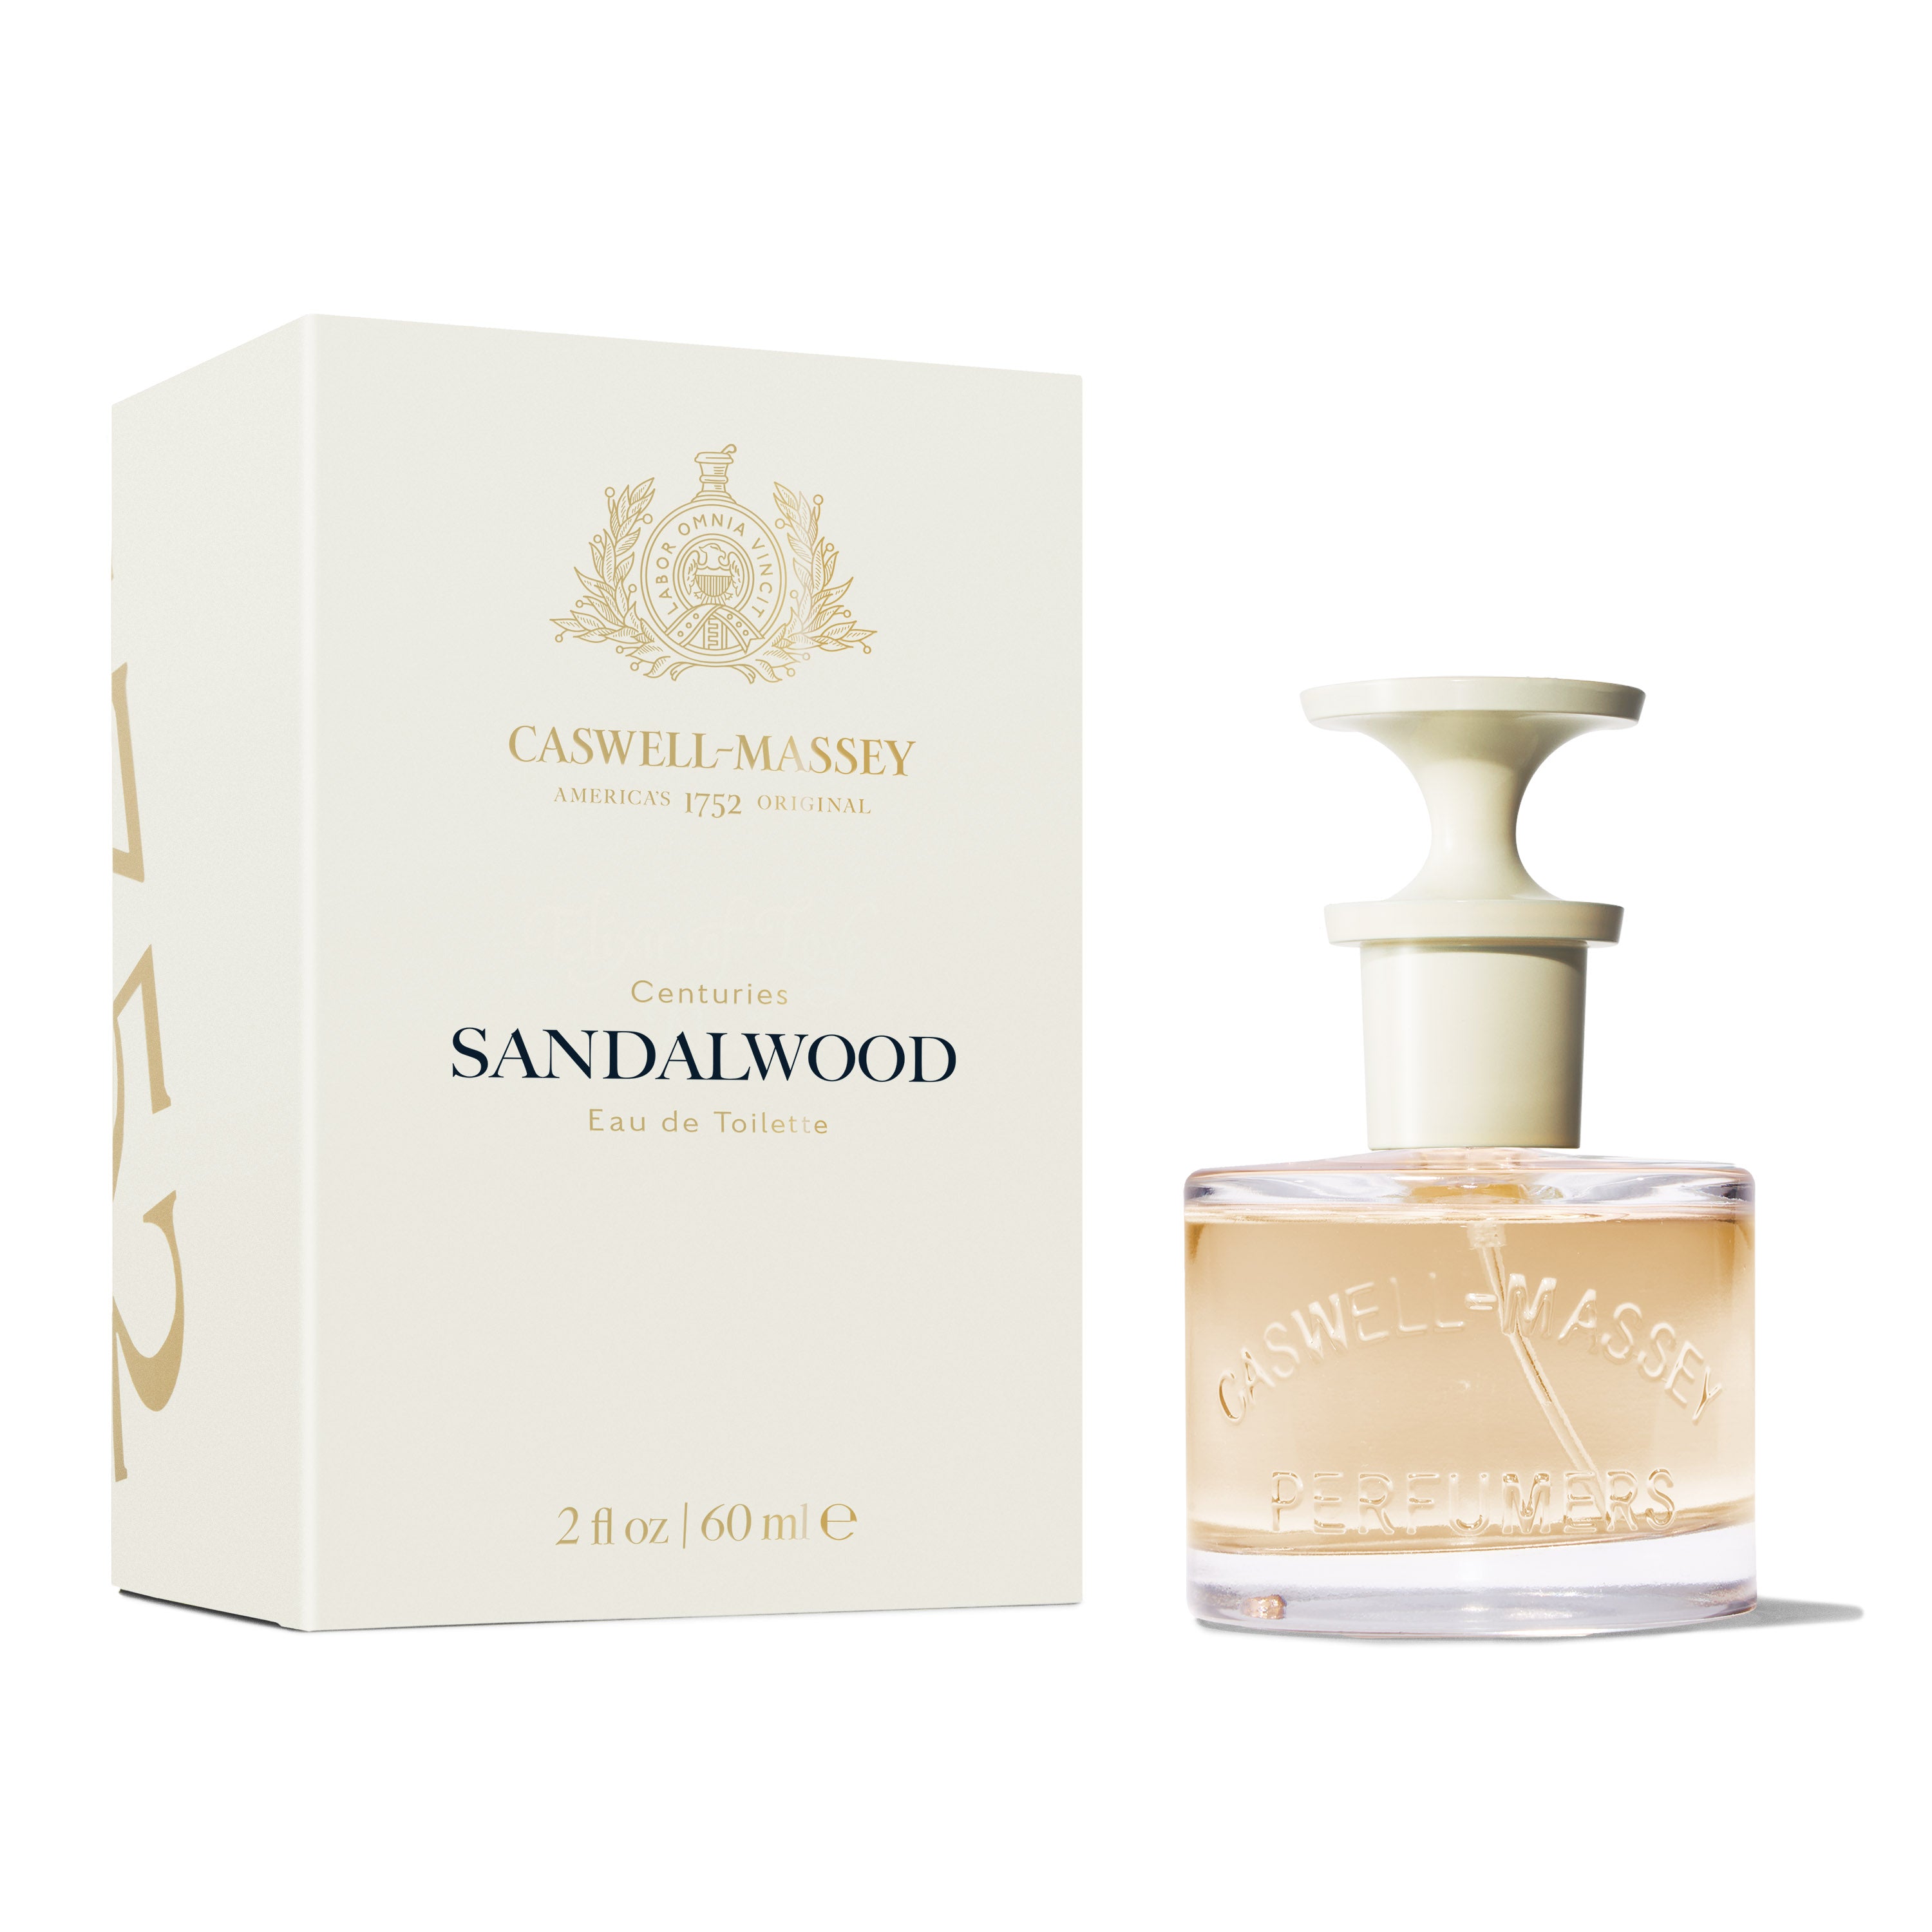 Caswell-Massey Sandalwood Eau de Toilette, Fine Fragrance 60mL Full Size, shown next to cream box